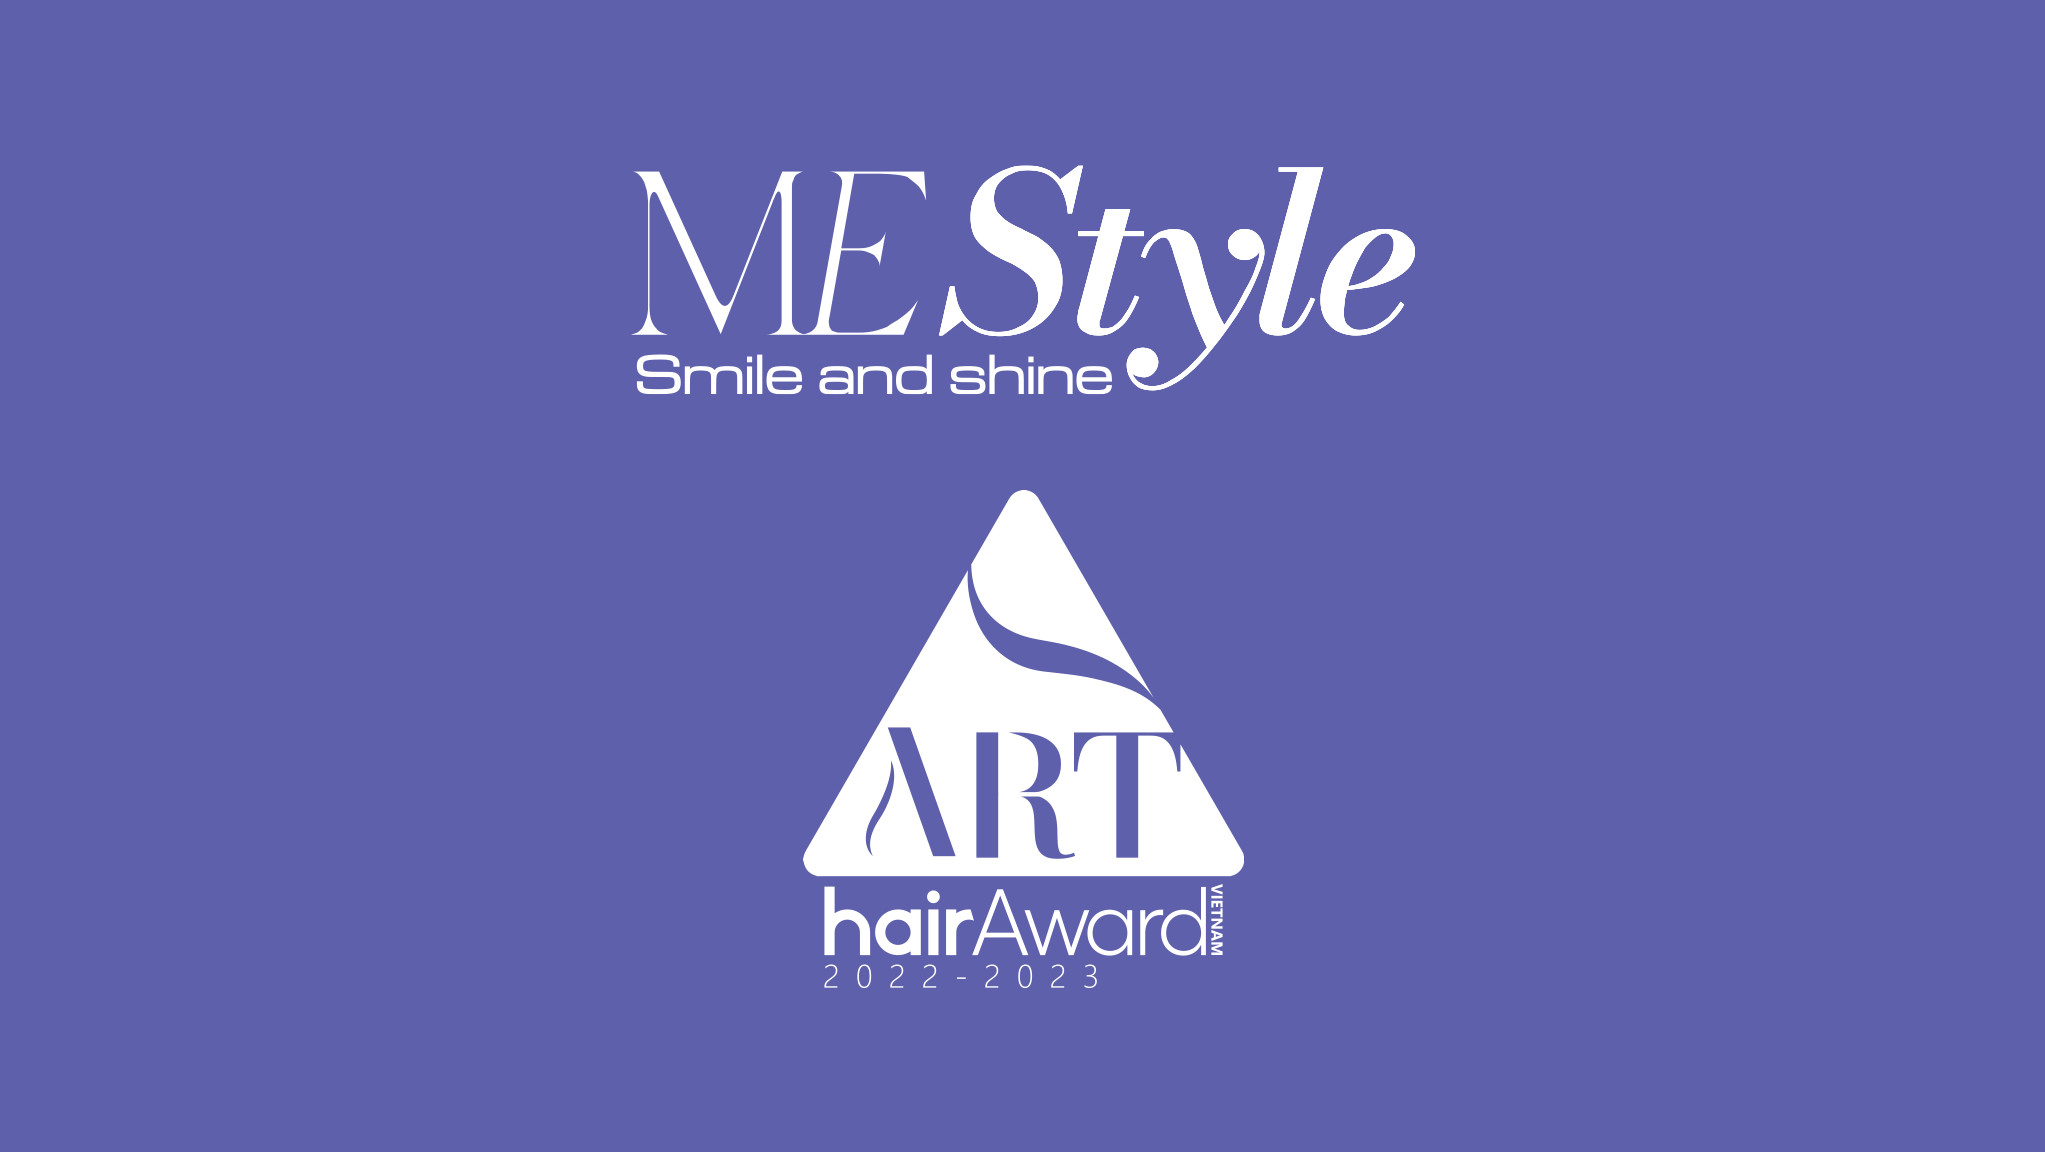 Art Hair Award Vietnam 2022 – 2023